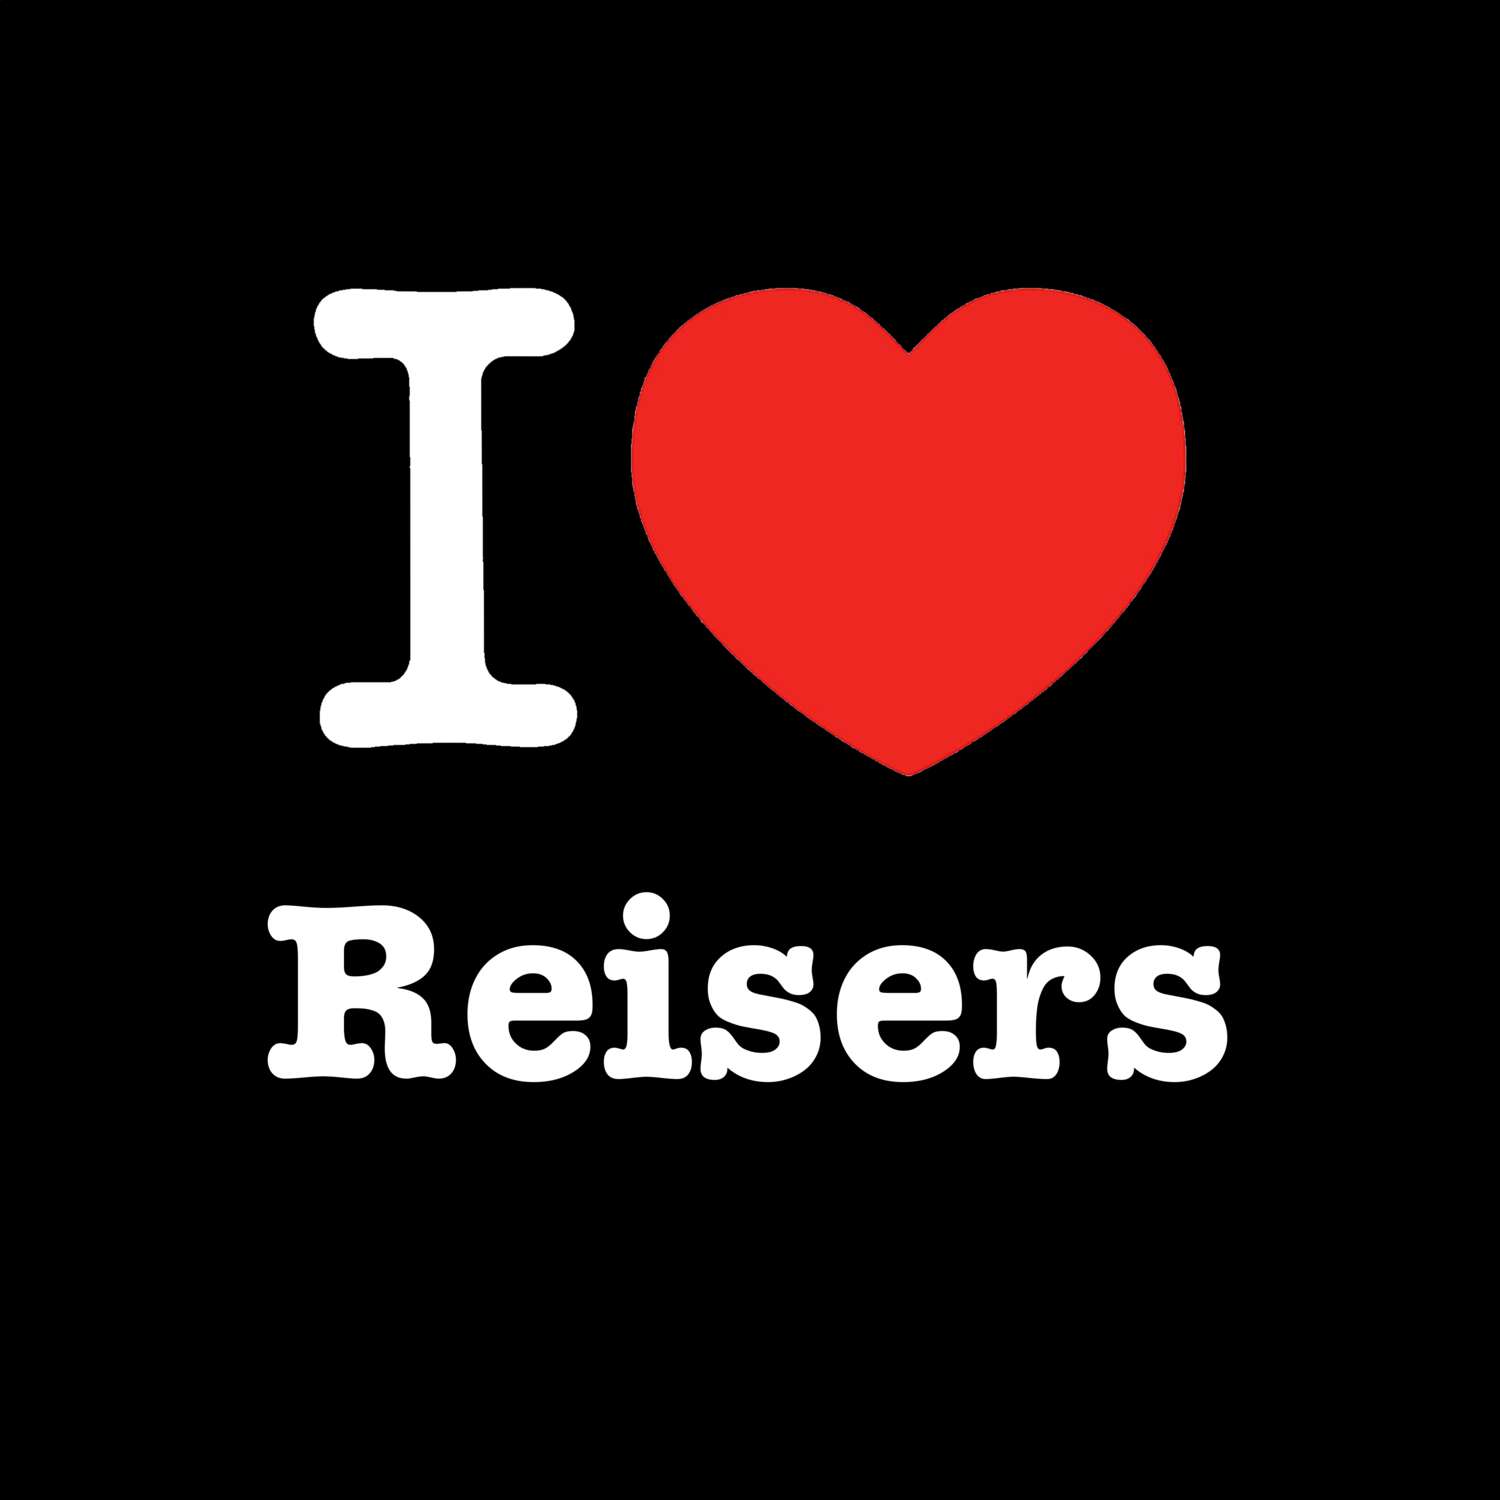 Reisers T-Shirt »I love«